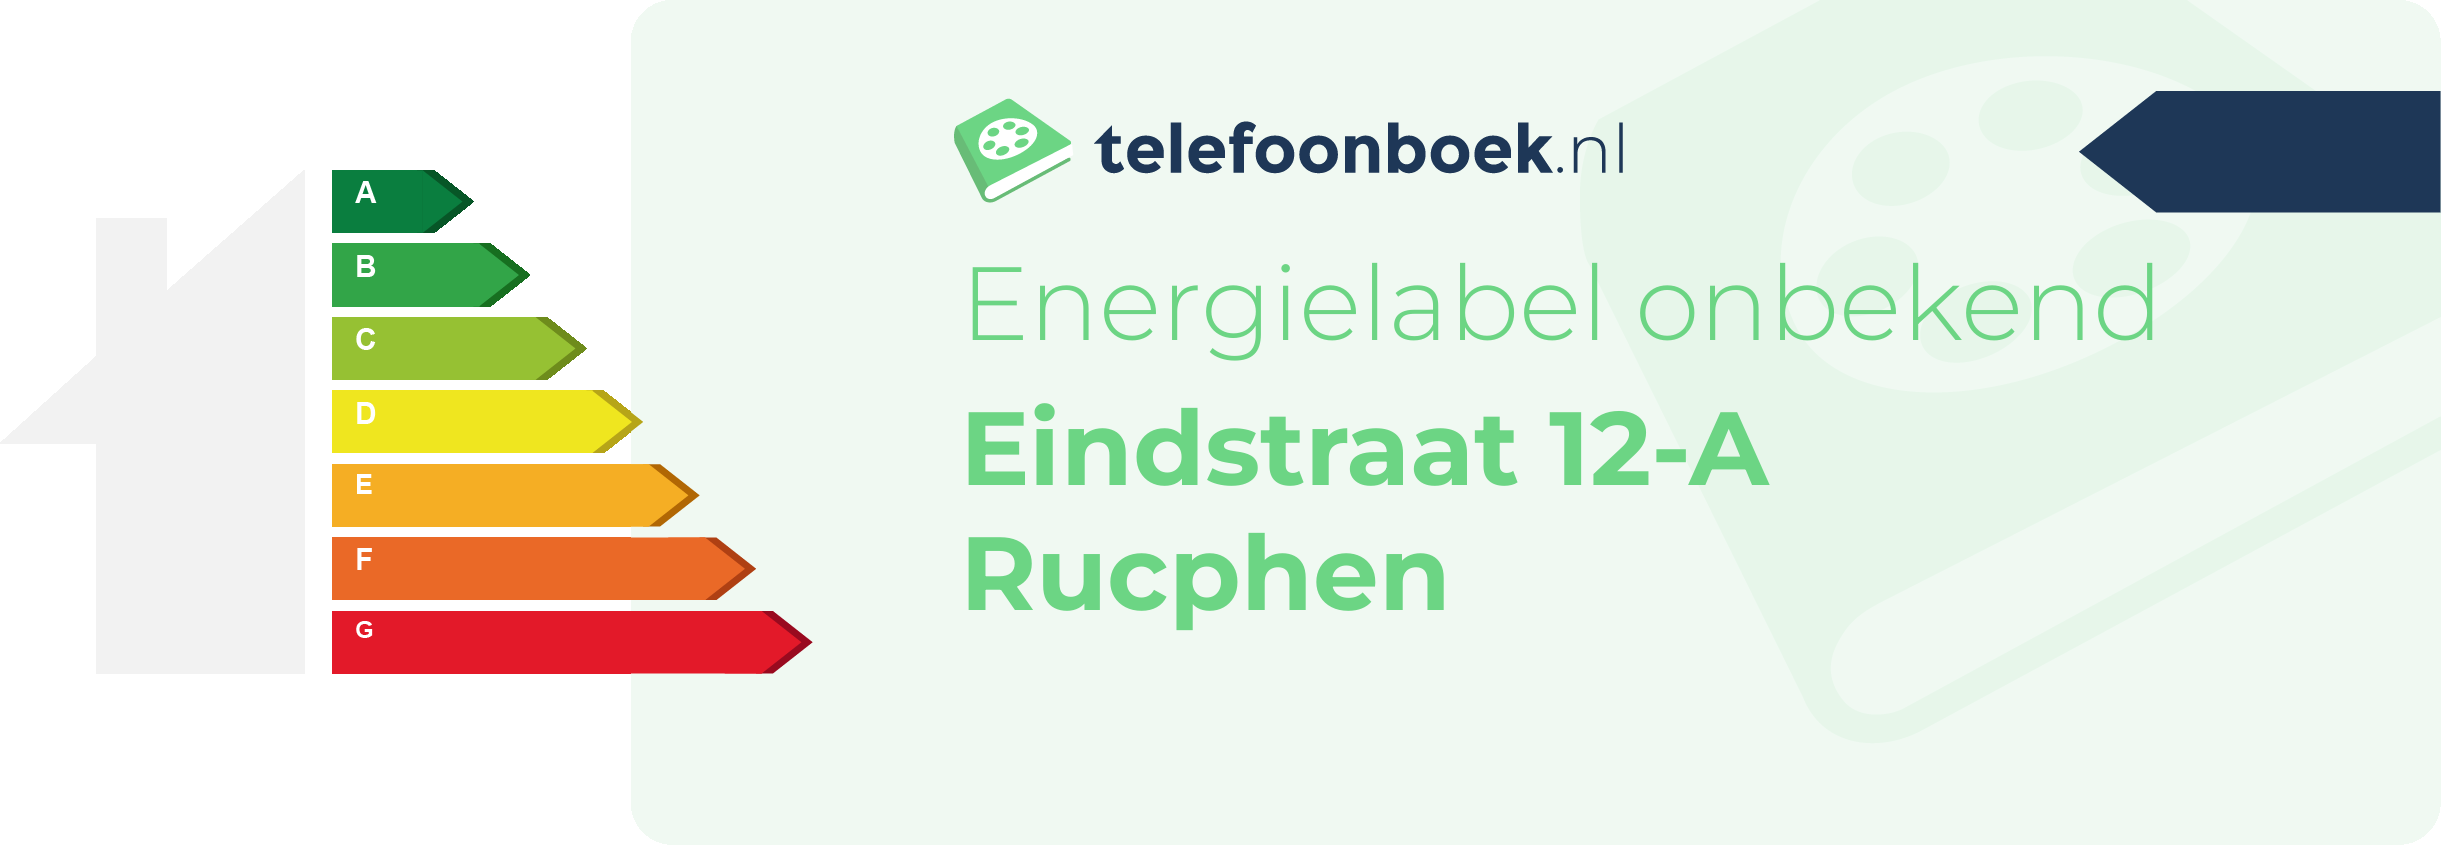 Energielabel Eindstraat 12-A Rucphen